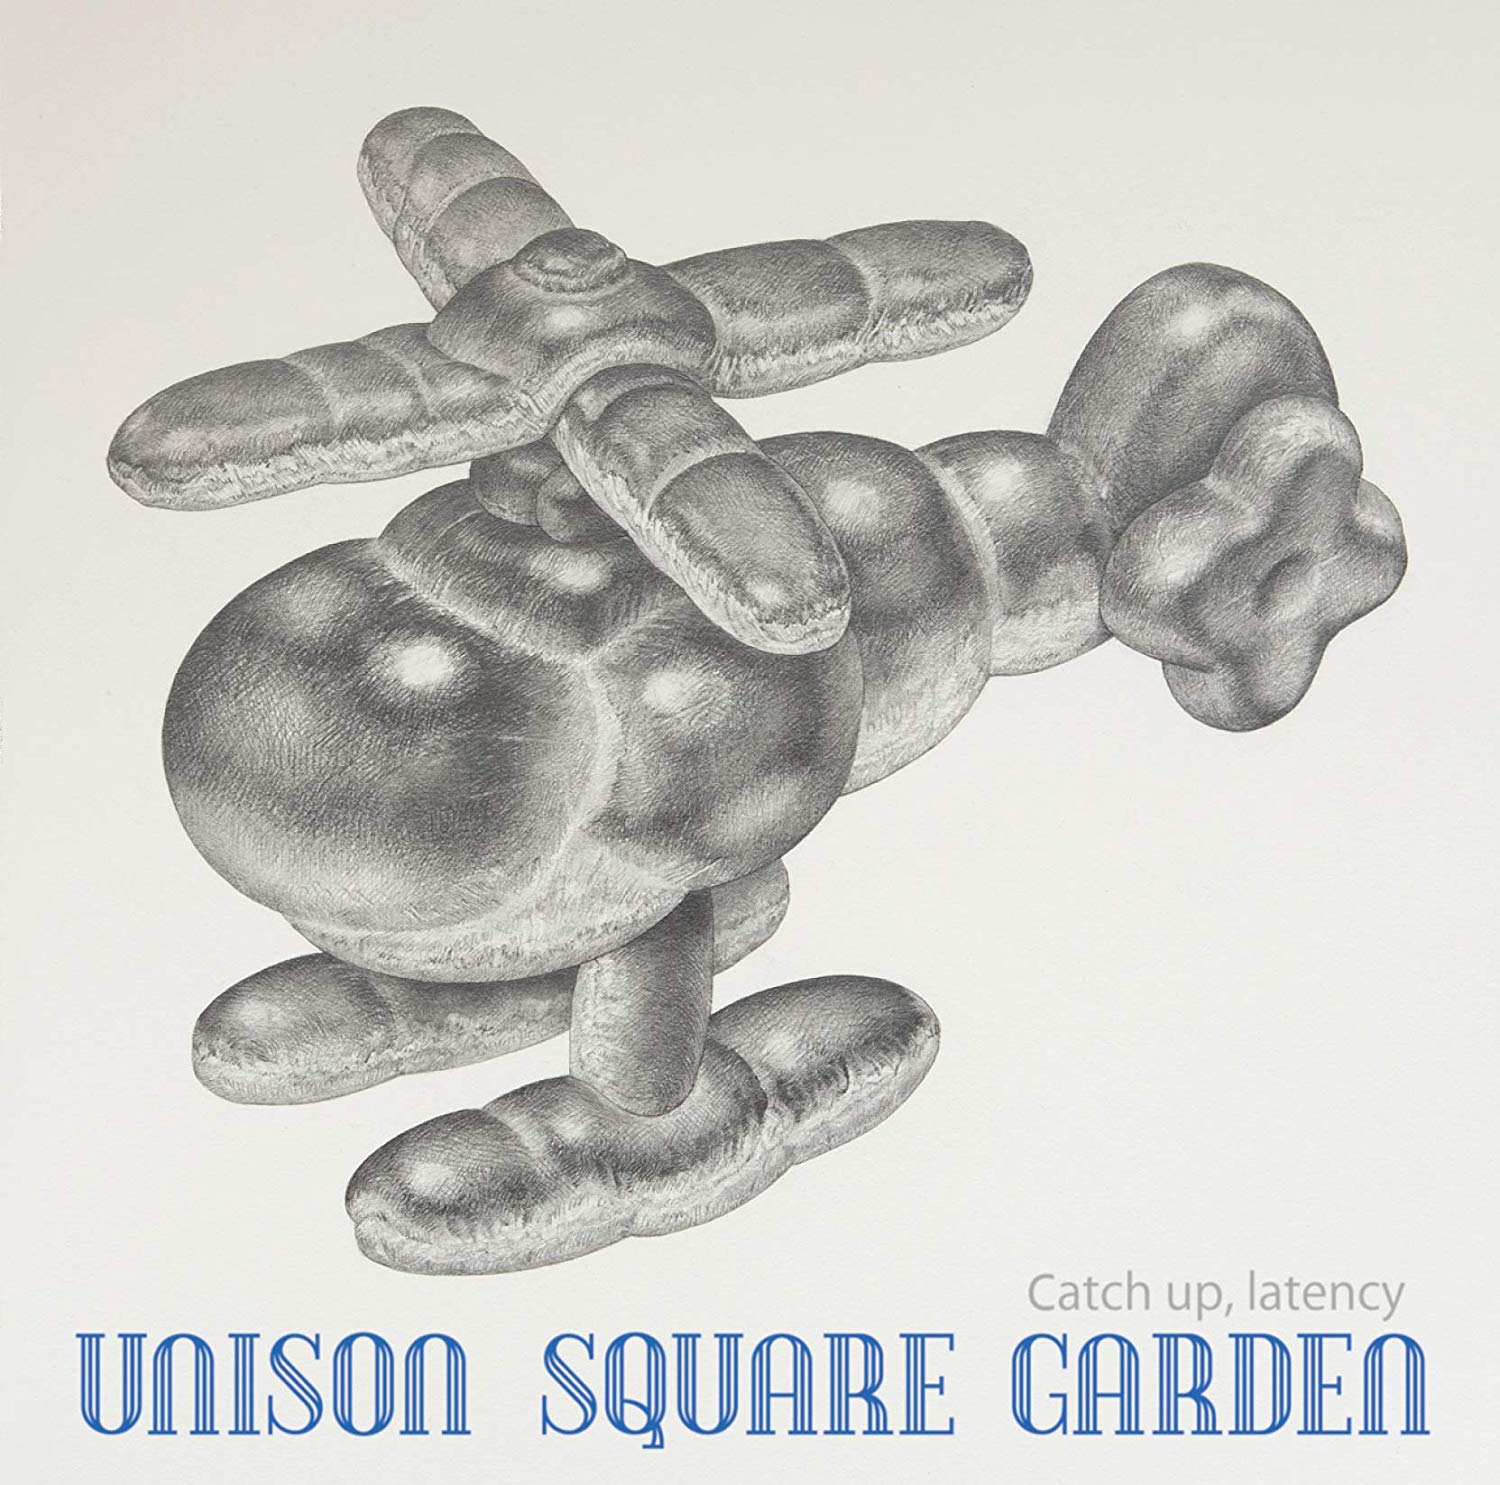 Unison Square Garden Catch Up Latency インタヴュー完全版 センチメンタルピリオド の いま がこの曲なんだろうな Mikiki